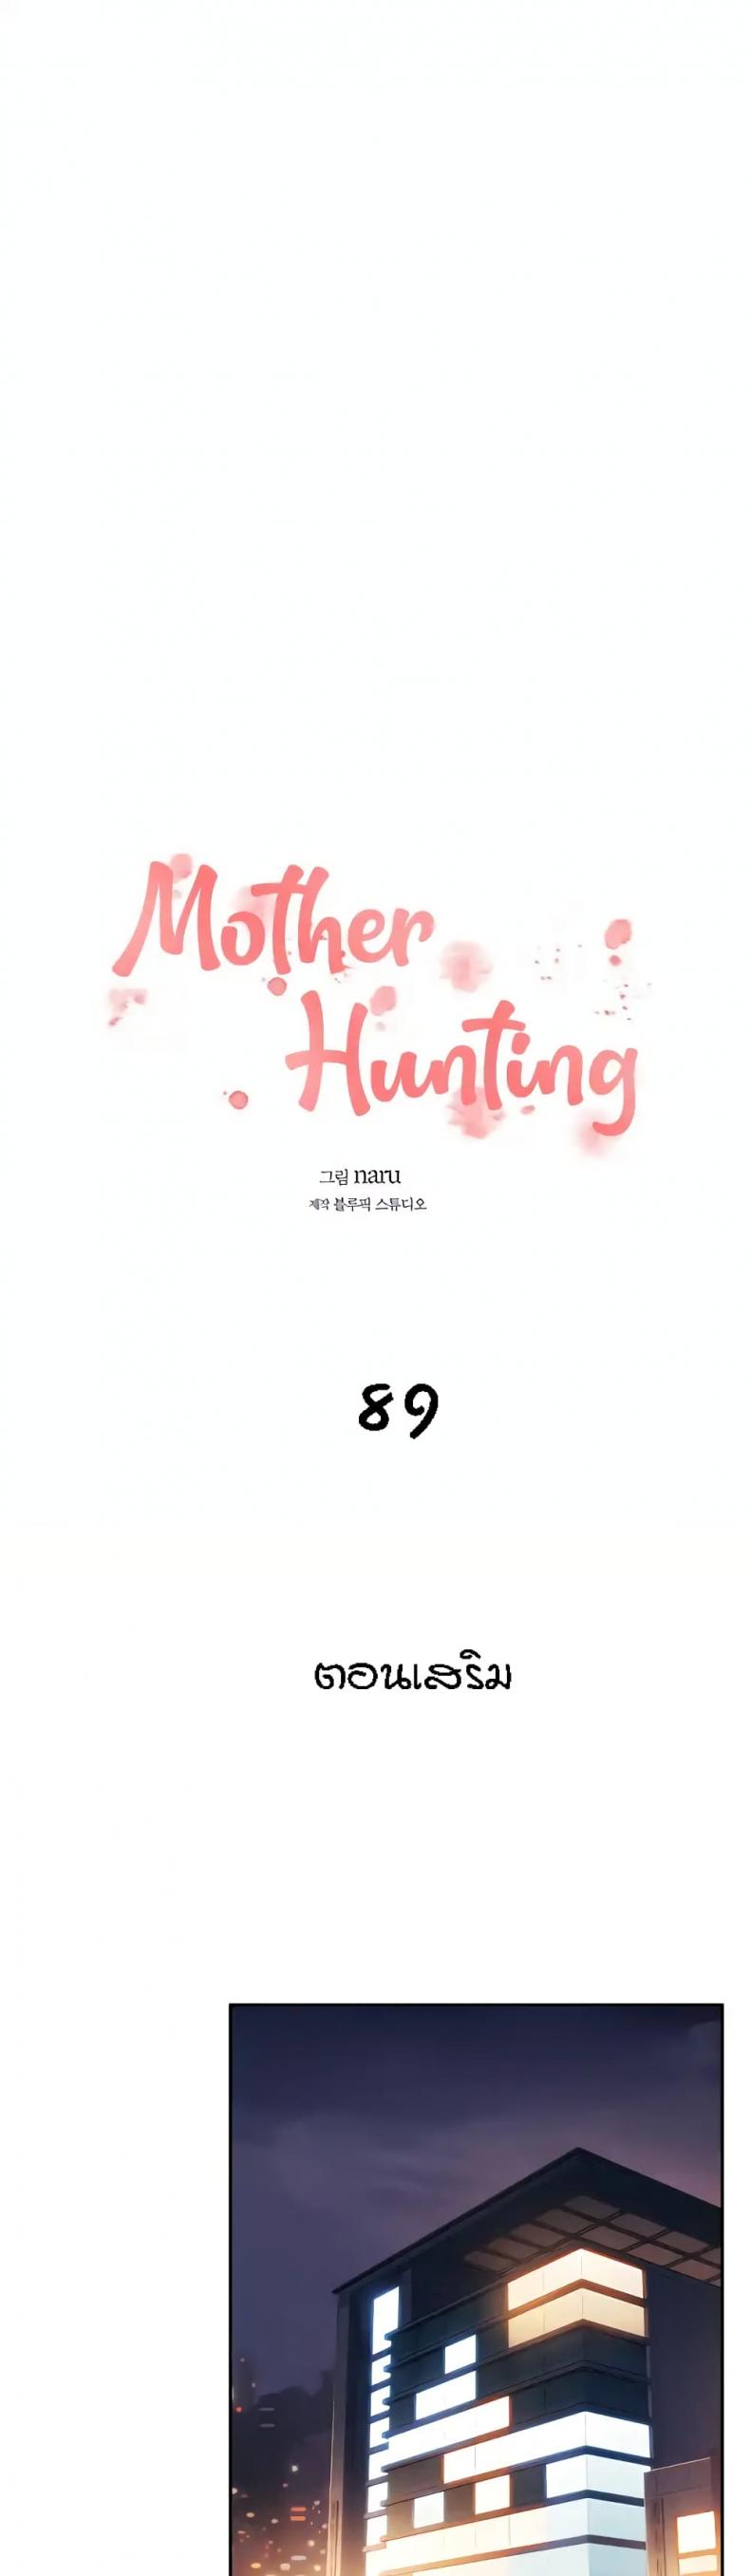 Mother Hunting 89-0 ภาพที่ 1